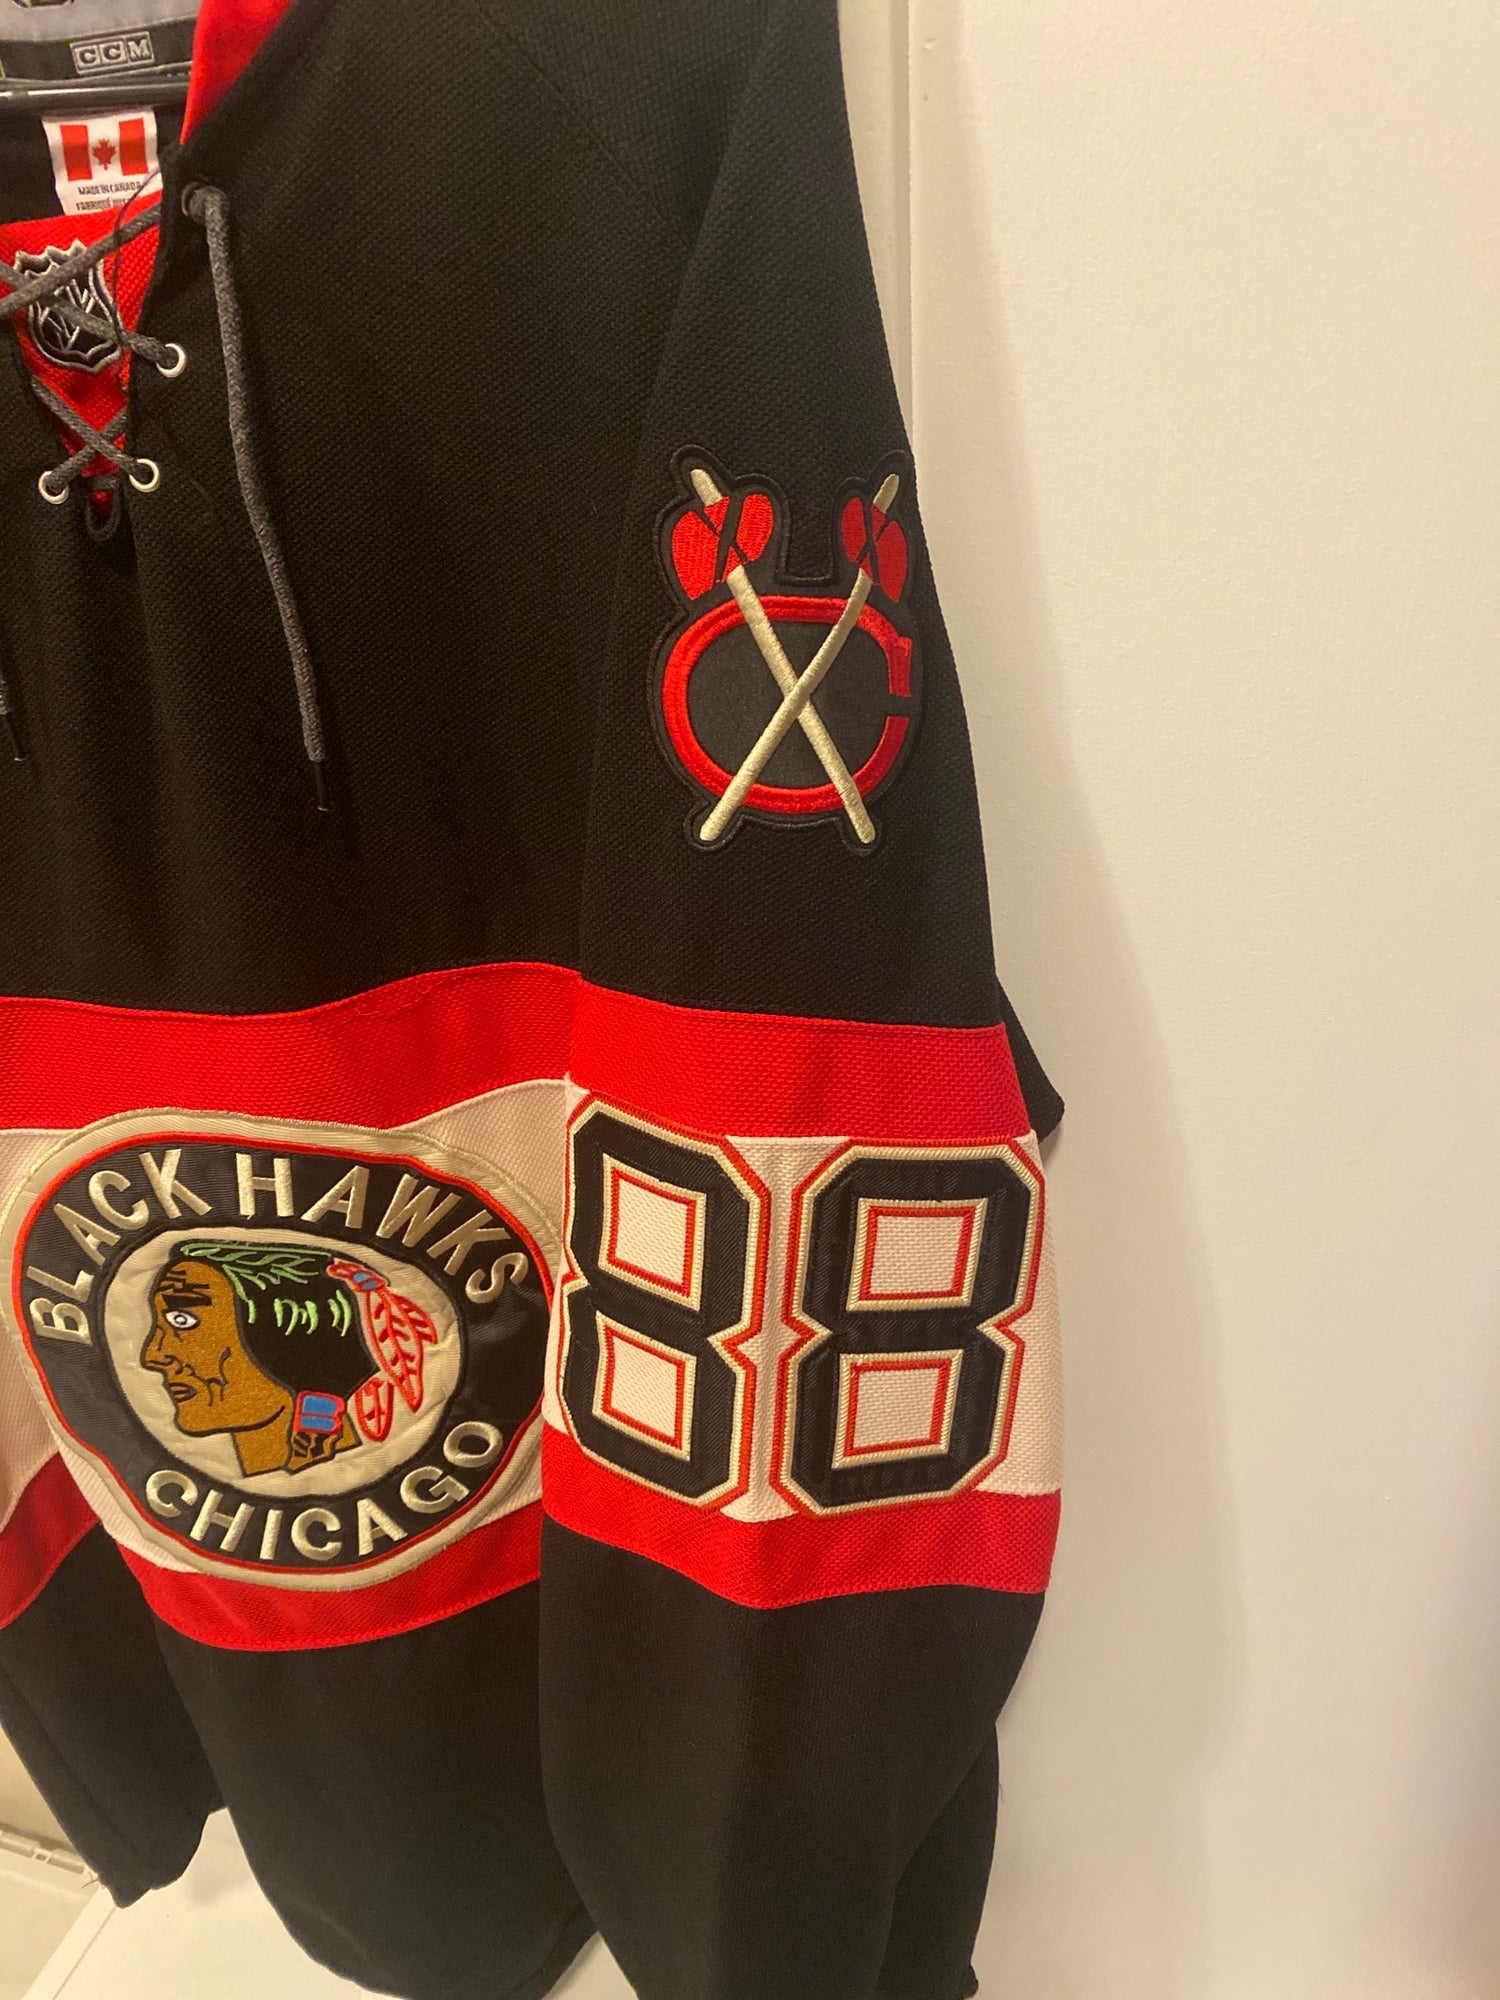 Reebok EDGE Patrick Kane Chicago Blackhawks Authentic Jersey